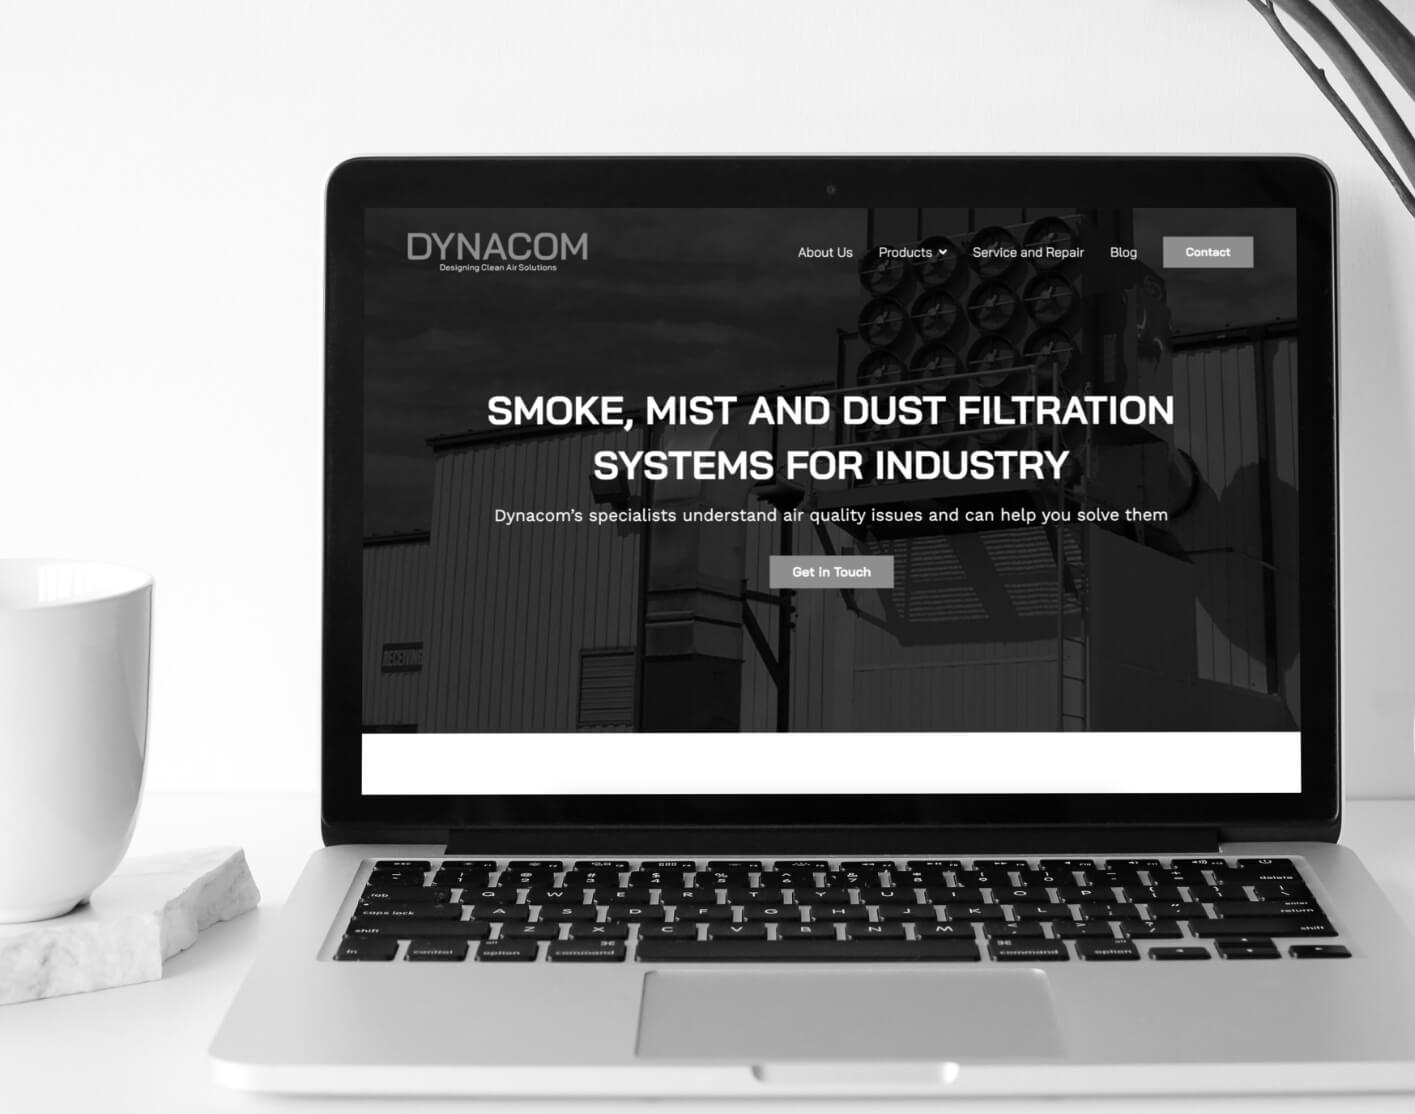 Dynacom website homepage on computer screen